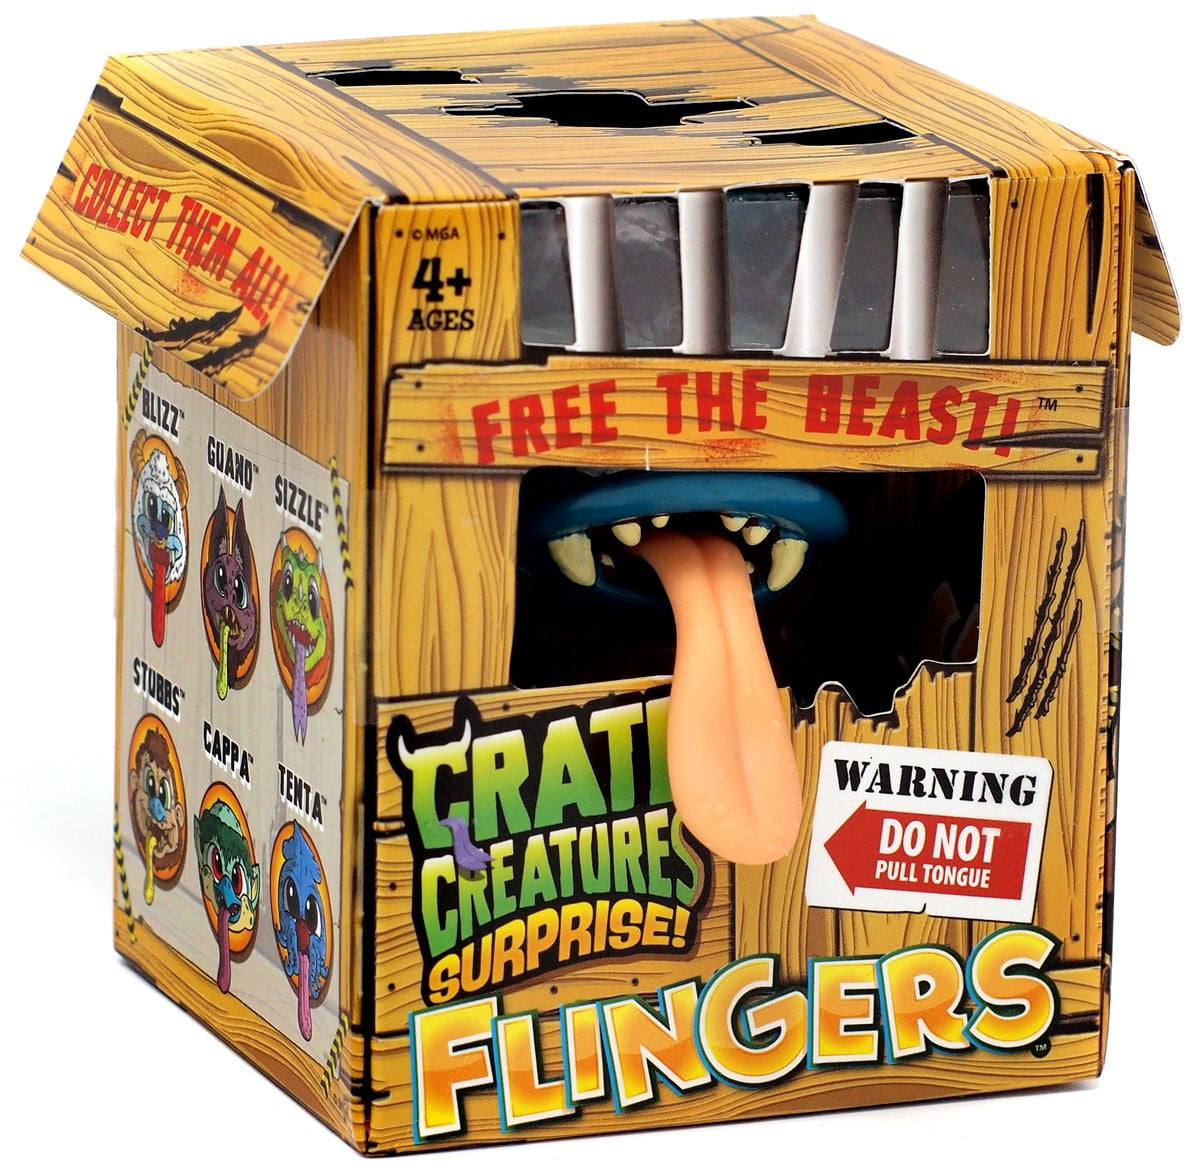 Flingers Crate Creatures Flea Surprise The Beast Toy Ages 4 for sale online 